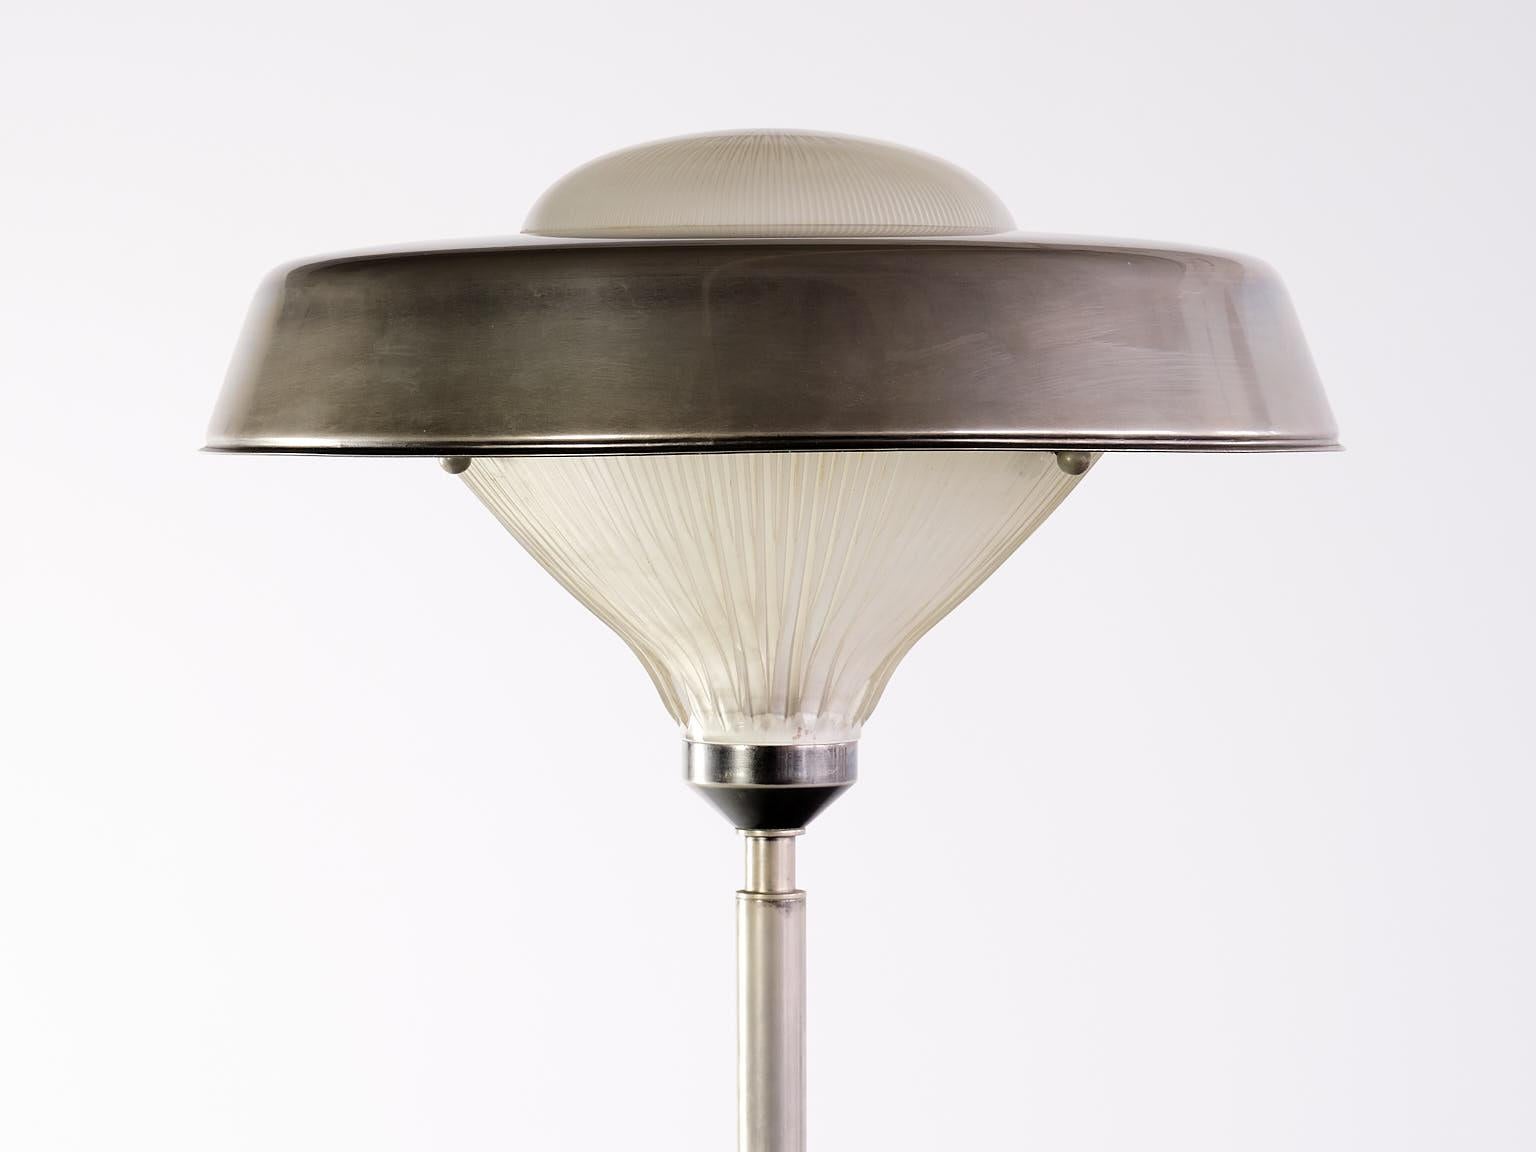 Studio BBPR 'Talia' Floor Lamp in Steel and Glass, Artemide, Italy, 1962 In Good Condition For Sale In The Hague, NL